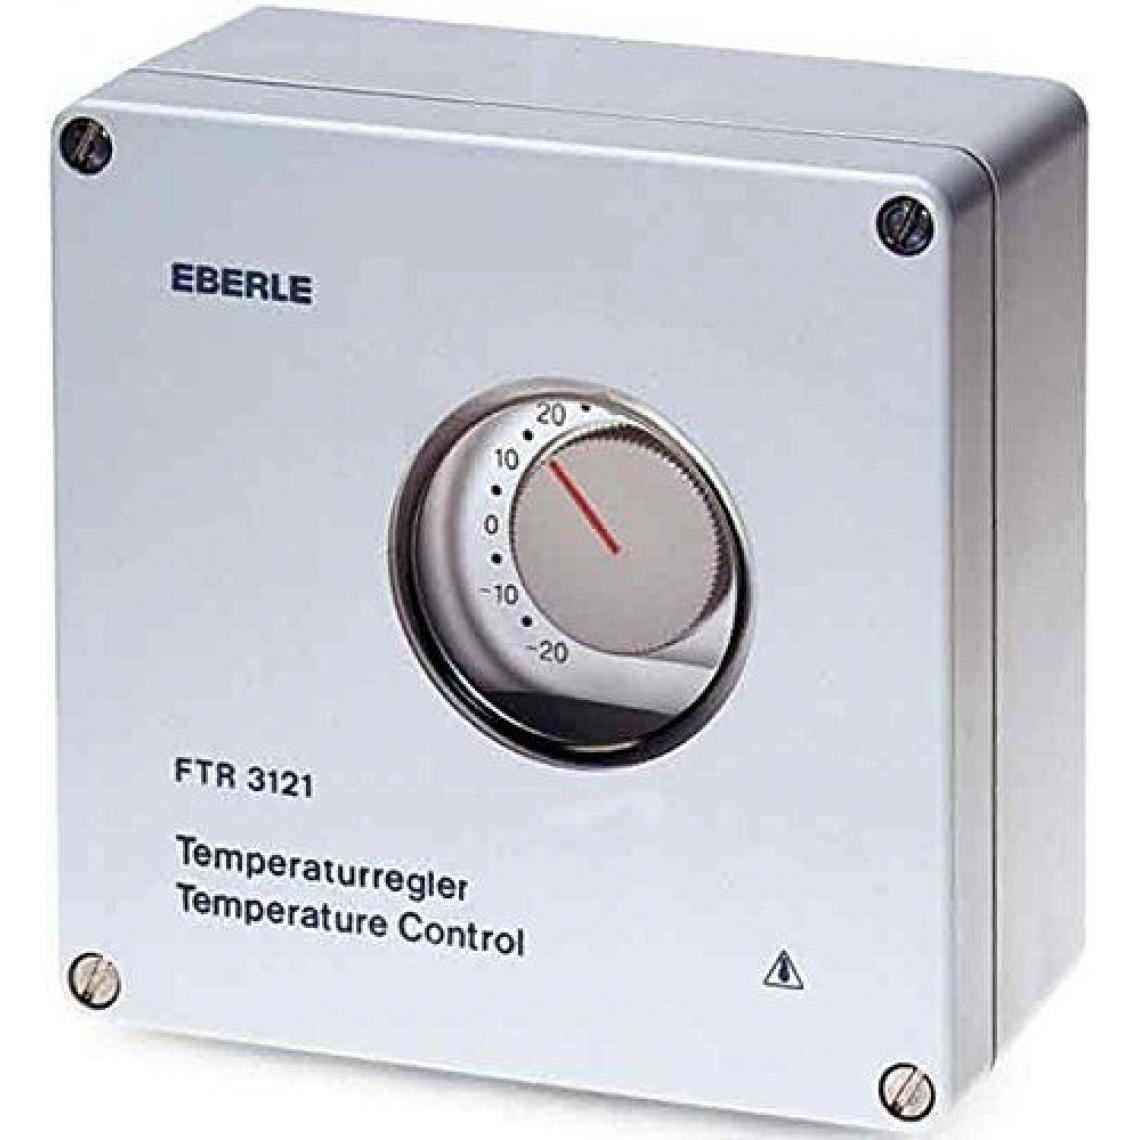 Inconnu - Eberle antigel Ftr – E 3121 - Thermostat